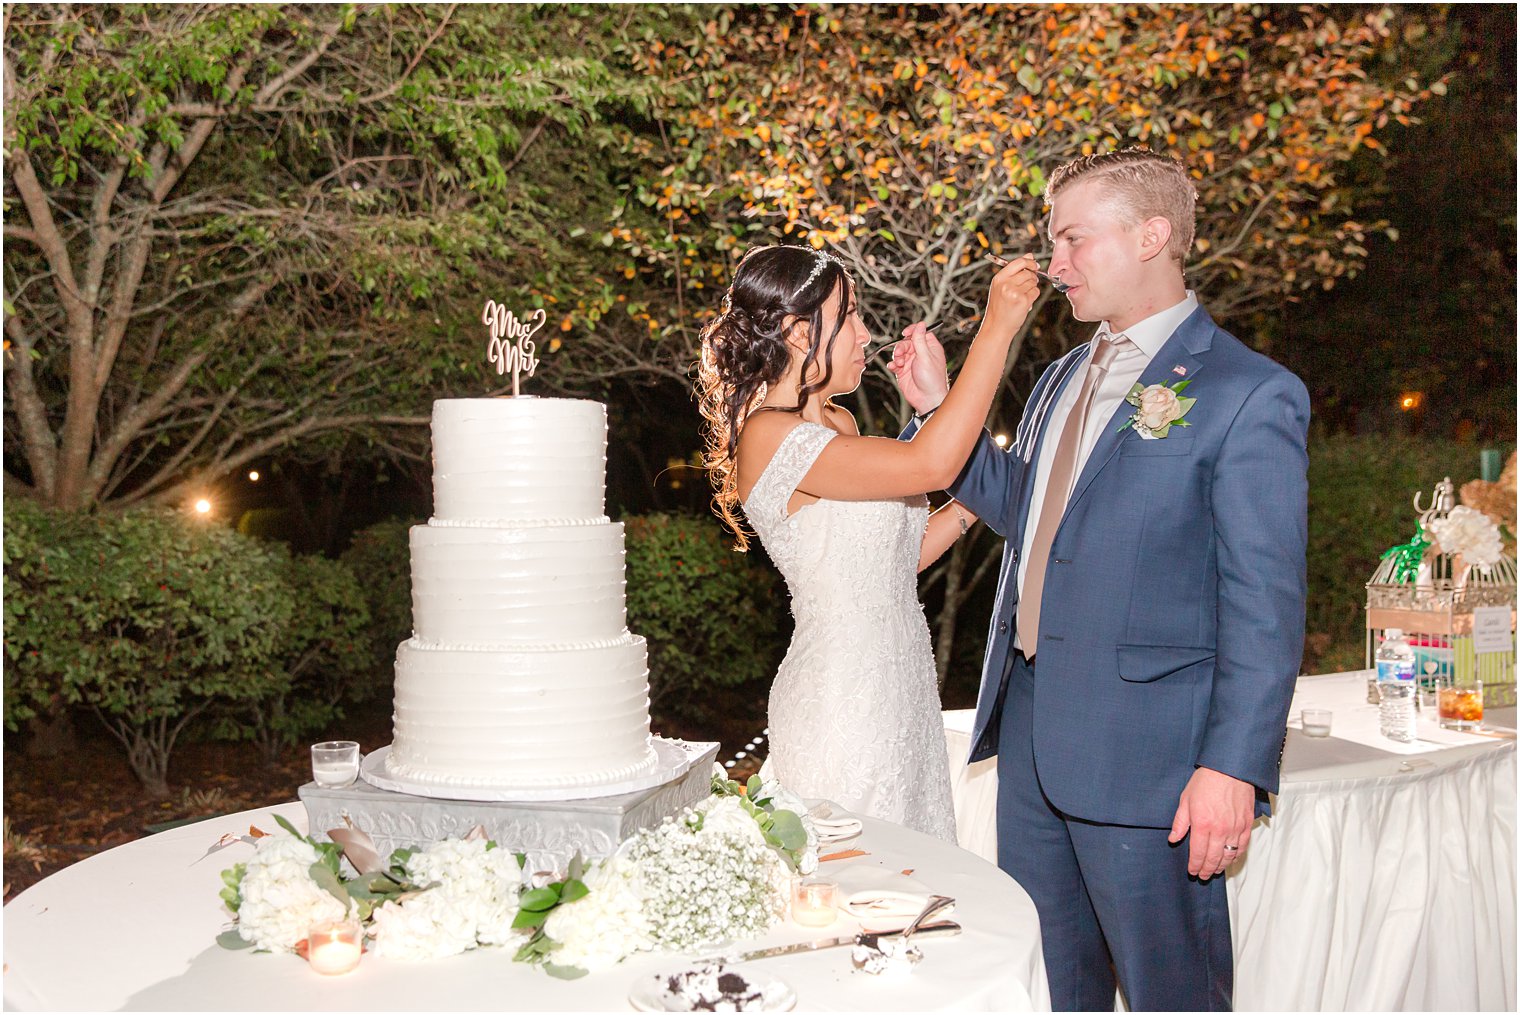 newlyweds cut wedding cake during Seaview Hotel Wedding reception